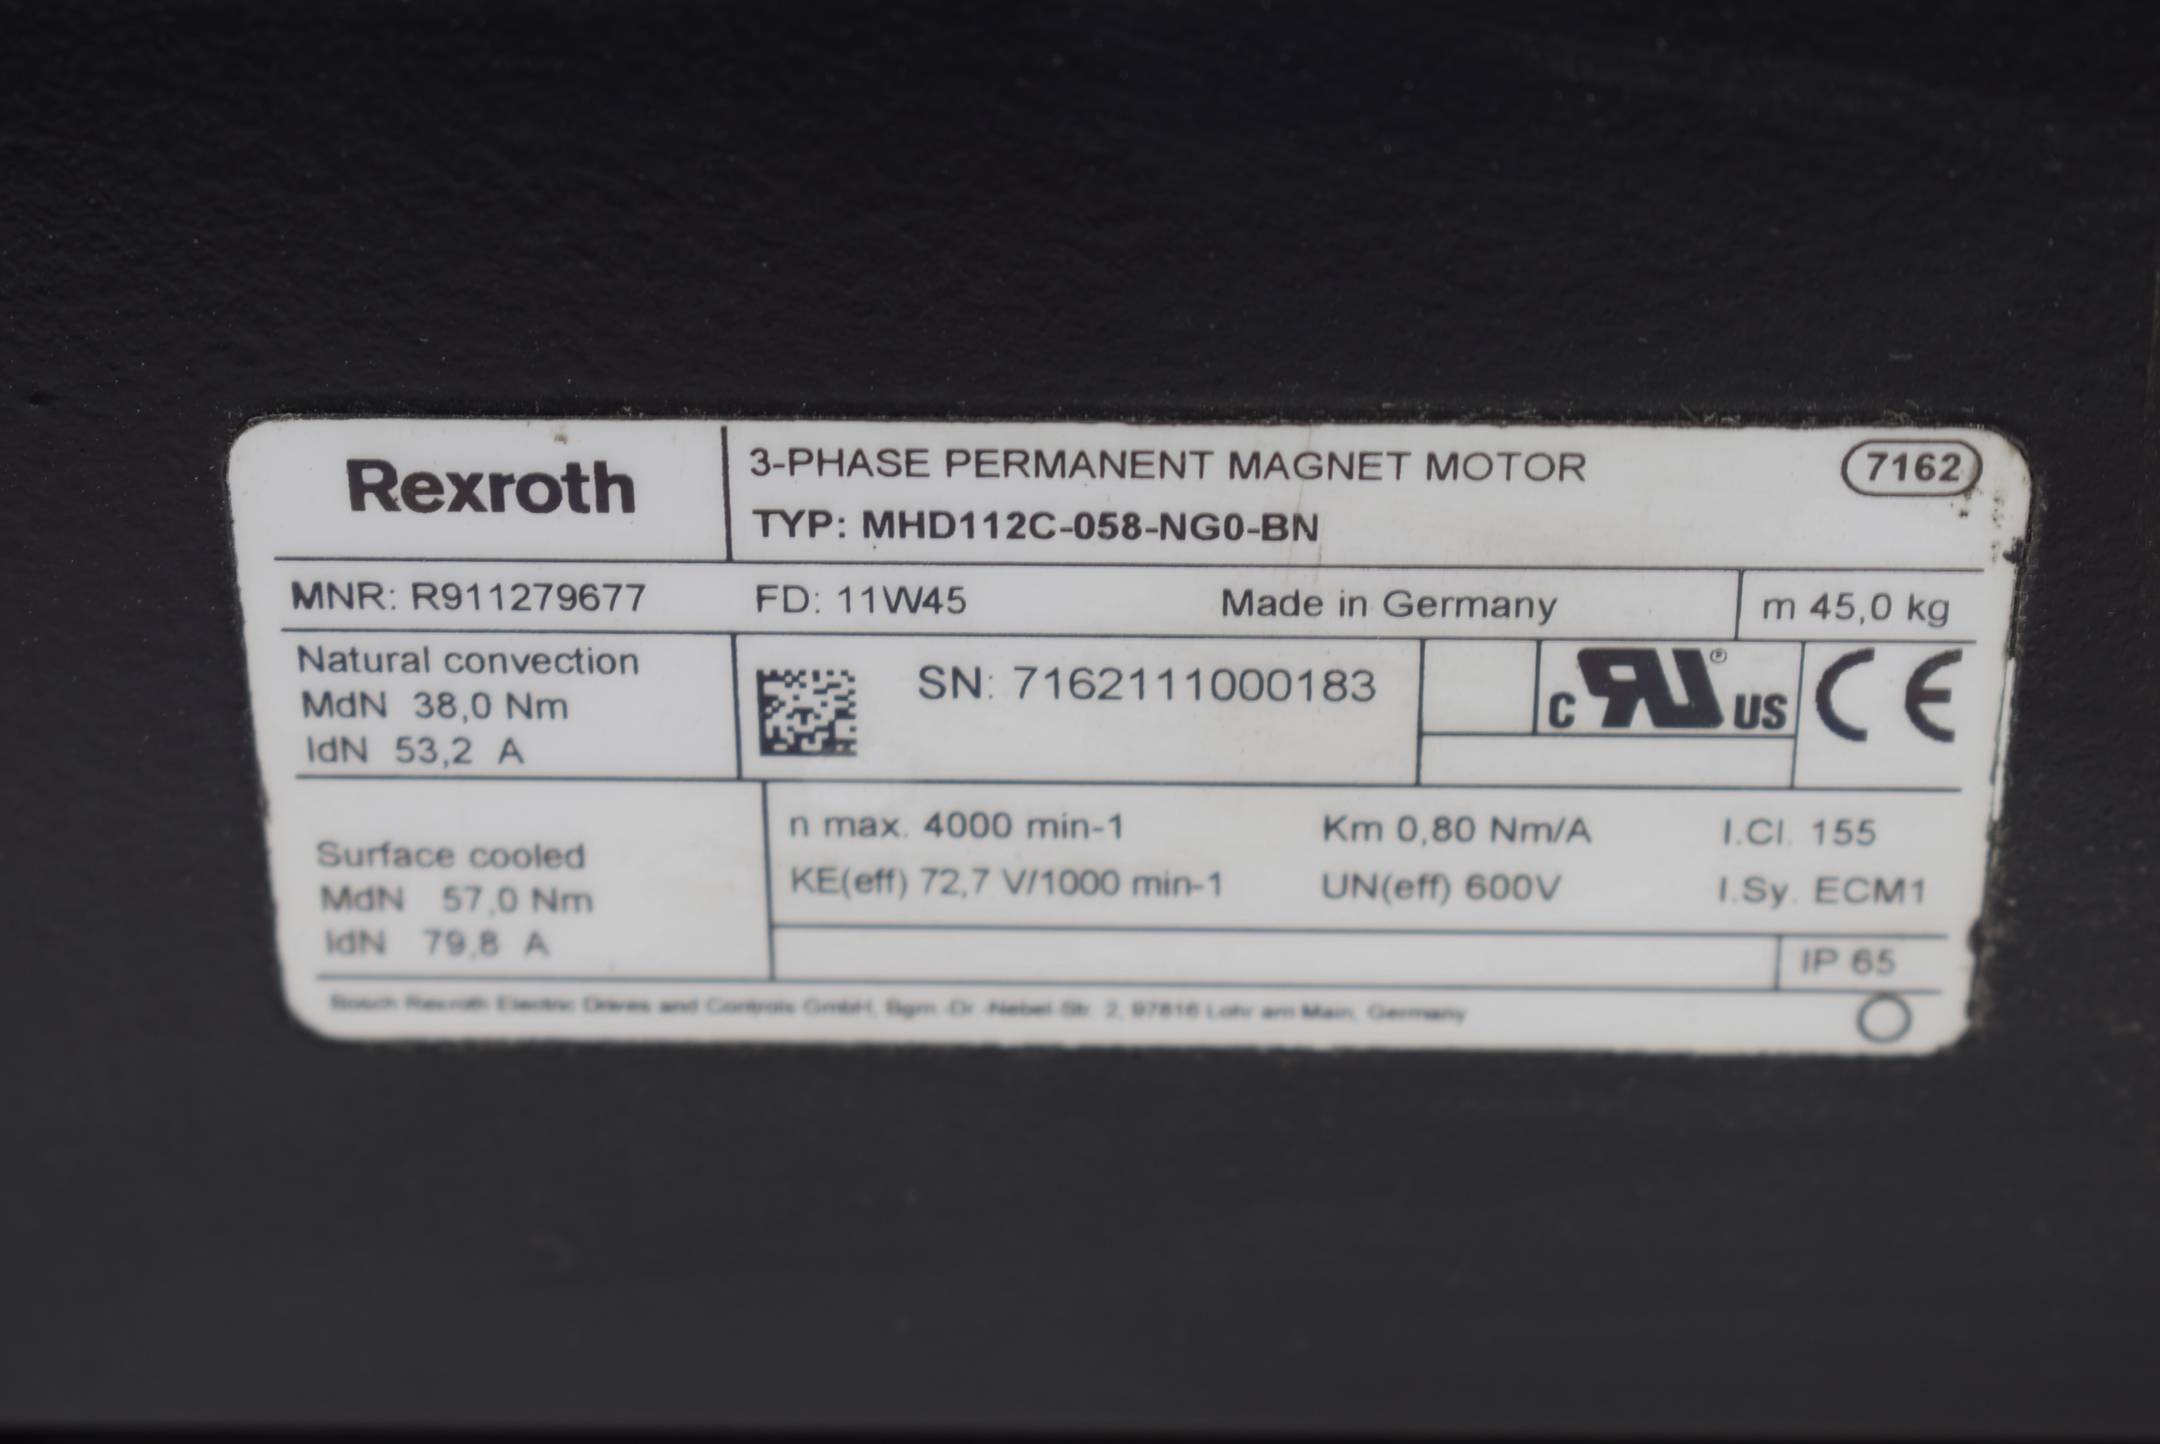 Rexroth 3-Phase Permanent Magnet Motor MHD112C-058-NG0-BN